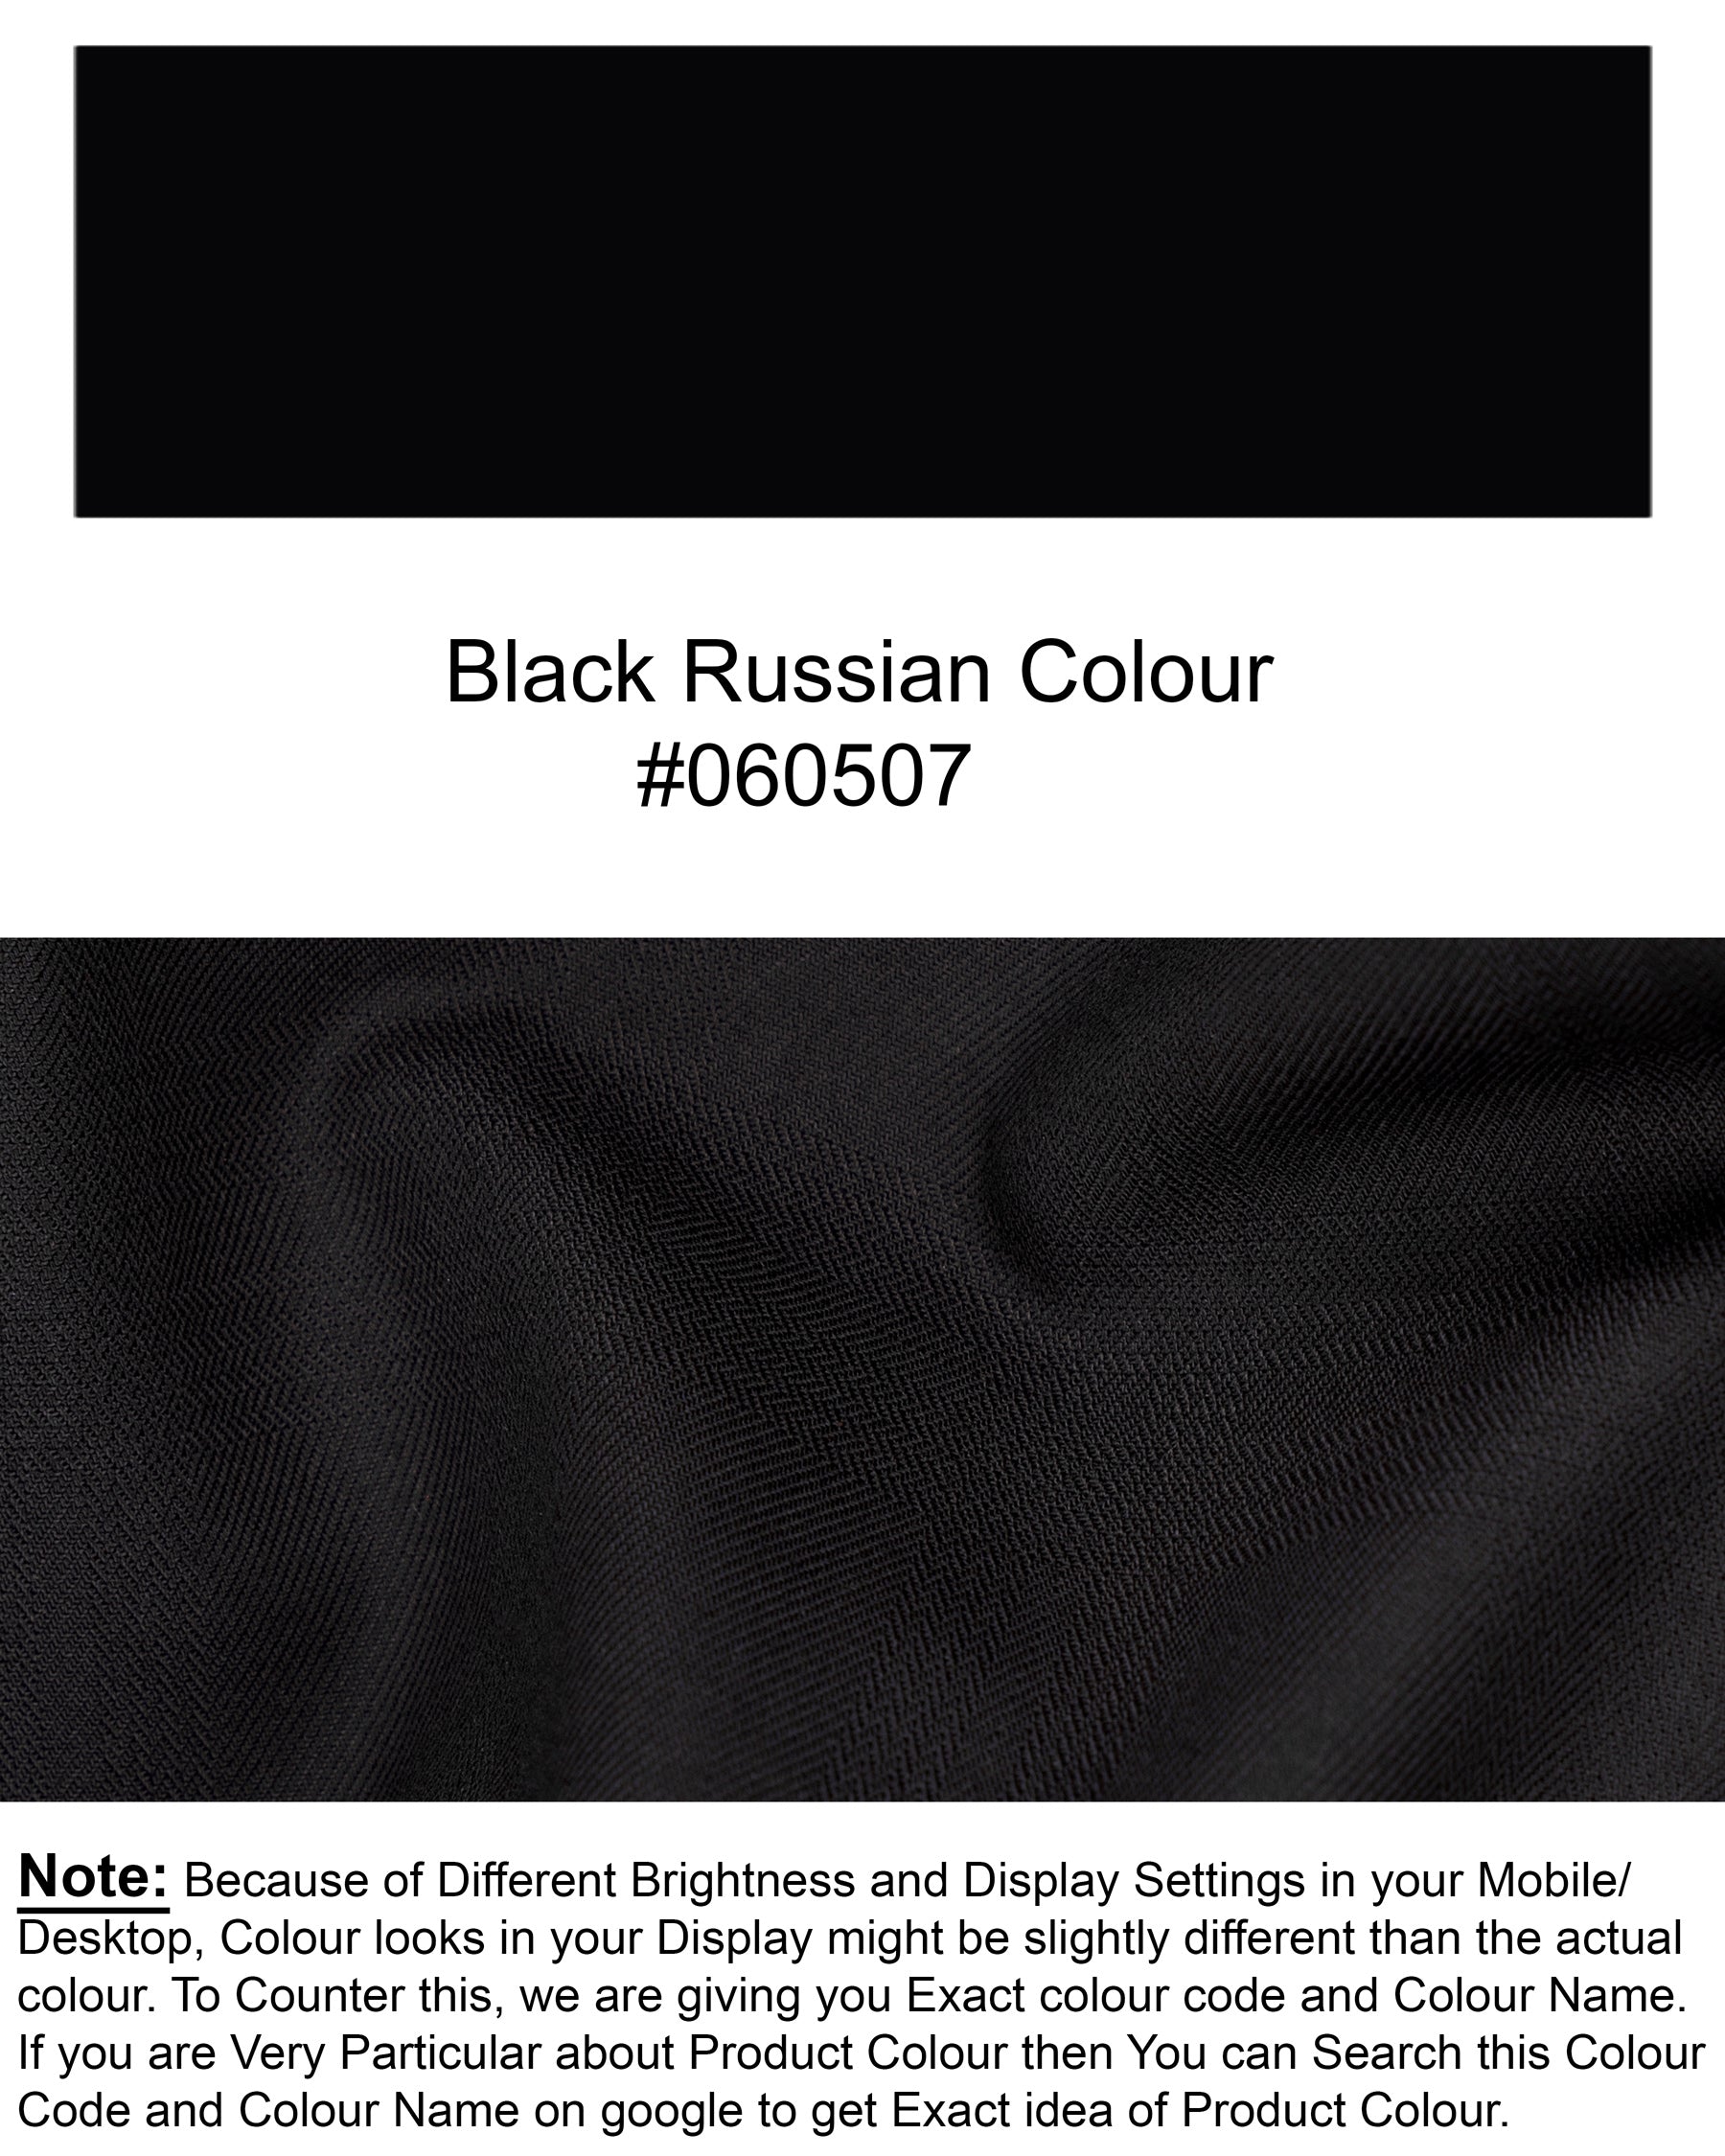 Black Russian Subtle Textured Wool rich Tuxedo Blazer BL1354-BKL-36, BL1354-BKL-38, BL1354-BKL-40, BL1354-BKL-42, BL1354-BKL-44, BL1354-BKL-46, BL1354-BKL-48, BL1354-BKL-50, BL1354-BKL-52, BL1354-BKL-54, BL1354-BKL-56, BL1354-BKL-58, BL1354-BKL-60